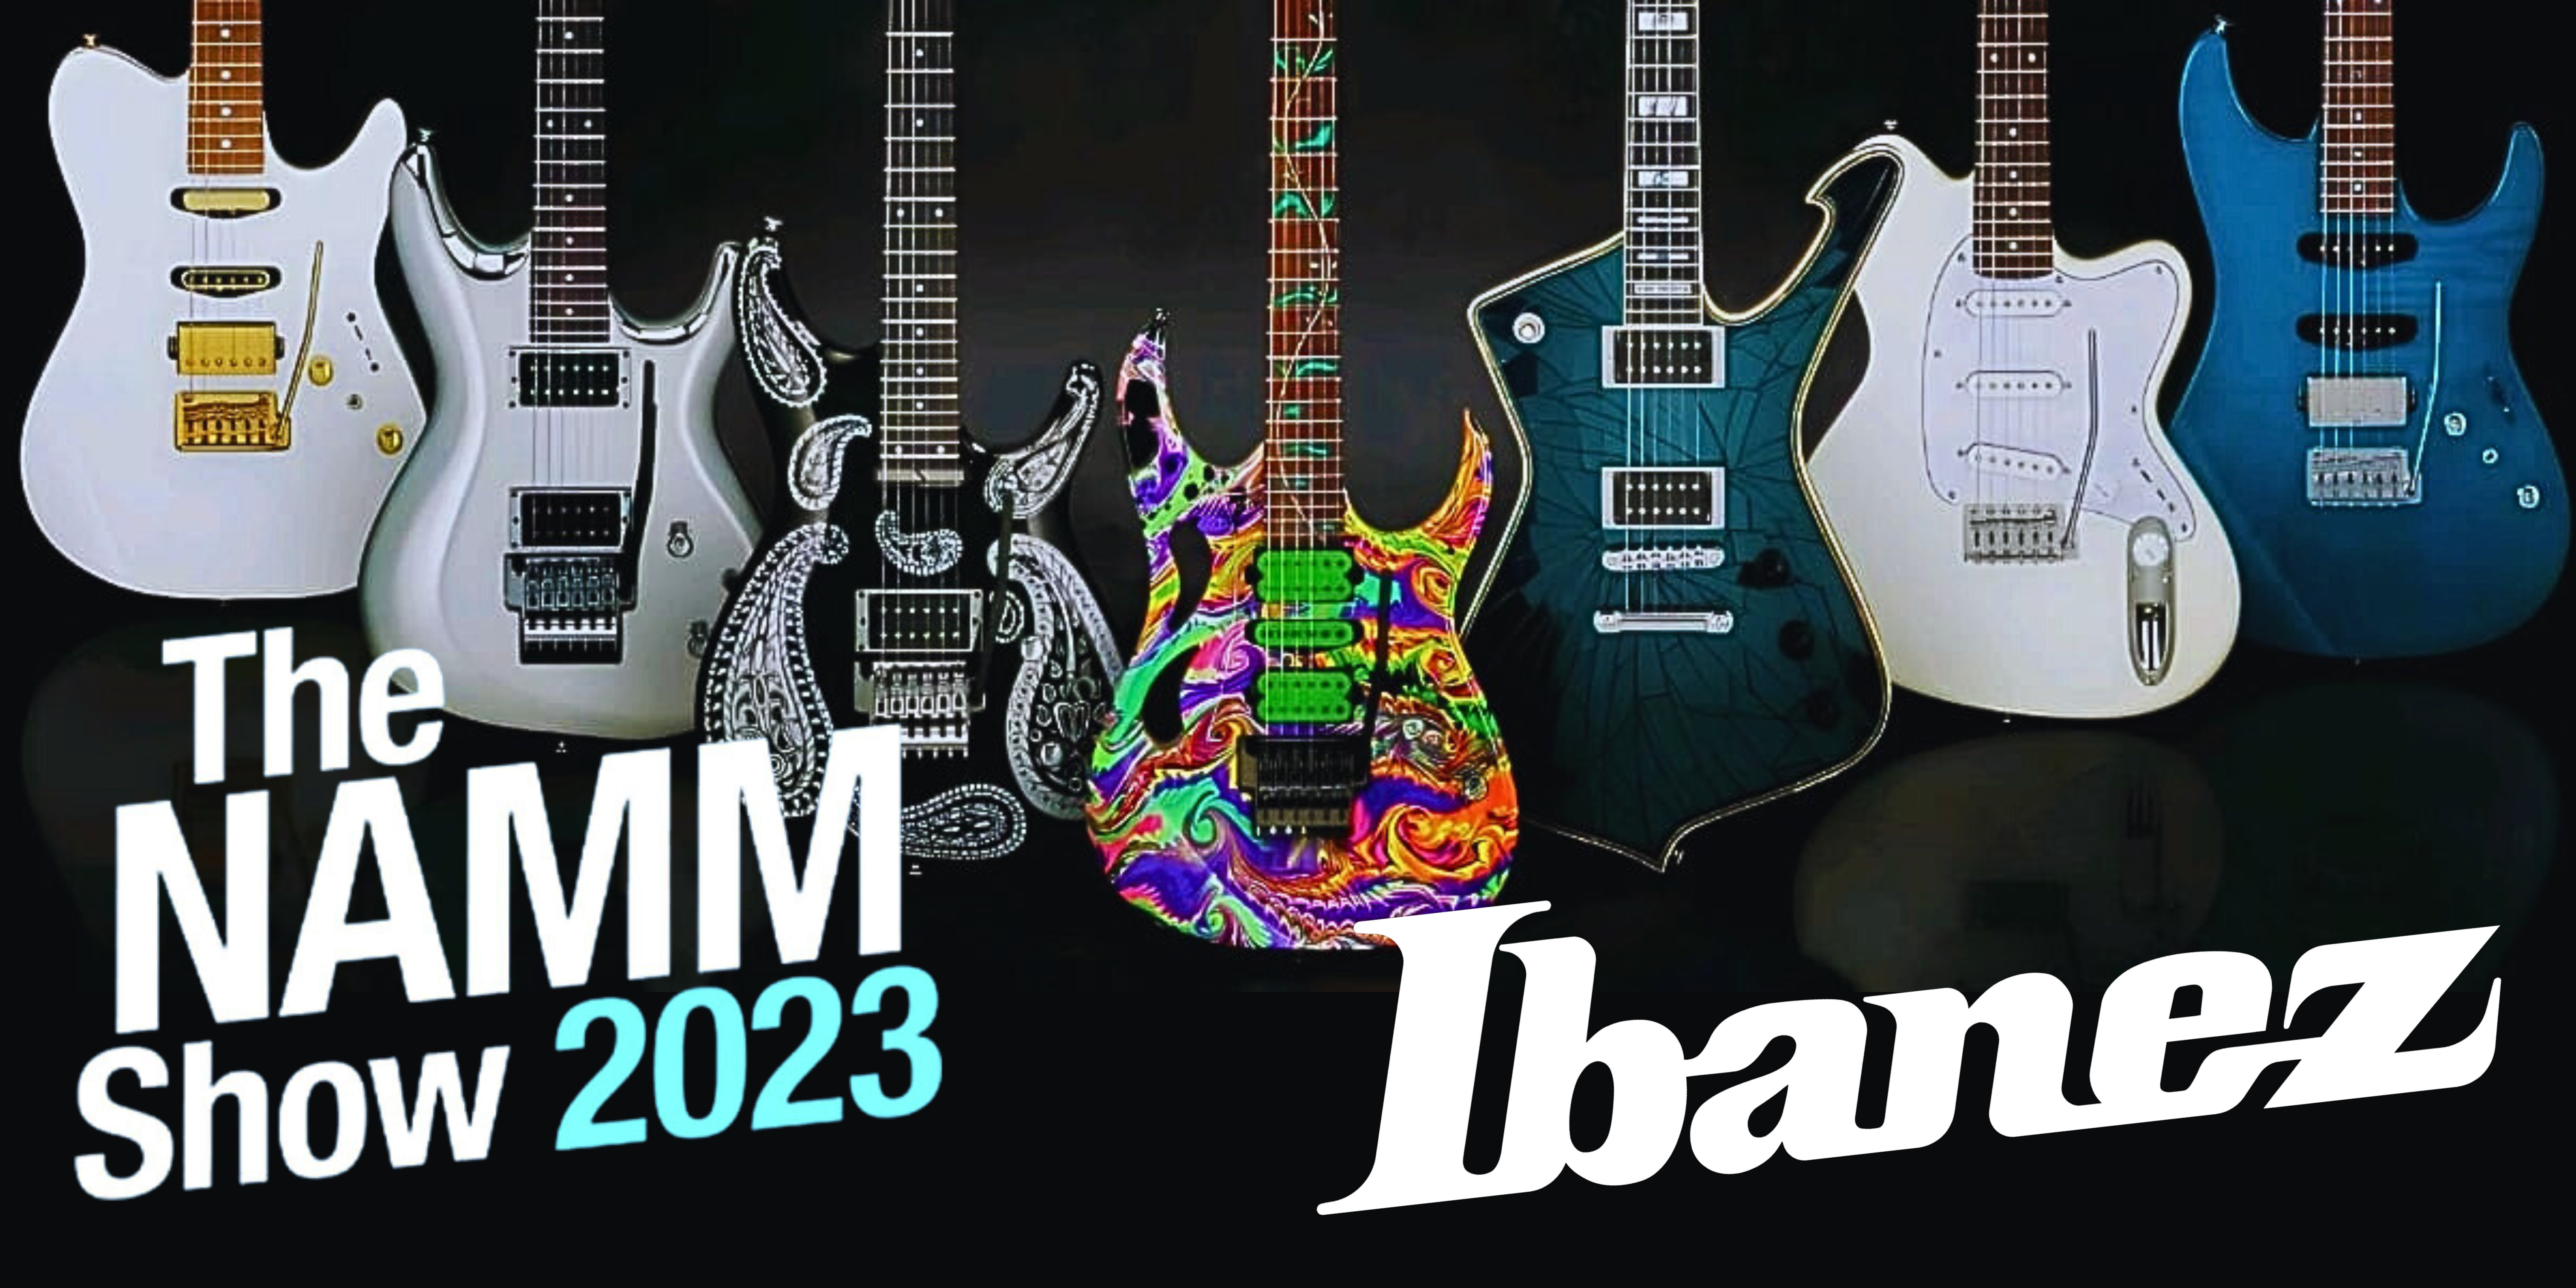 Ibanez guitars New Signature Electric Guitars Models for NAMM 2023